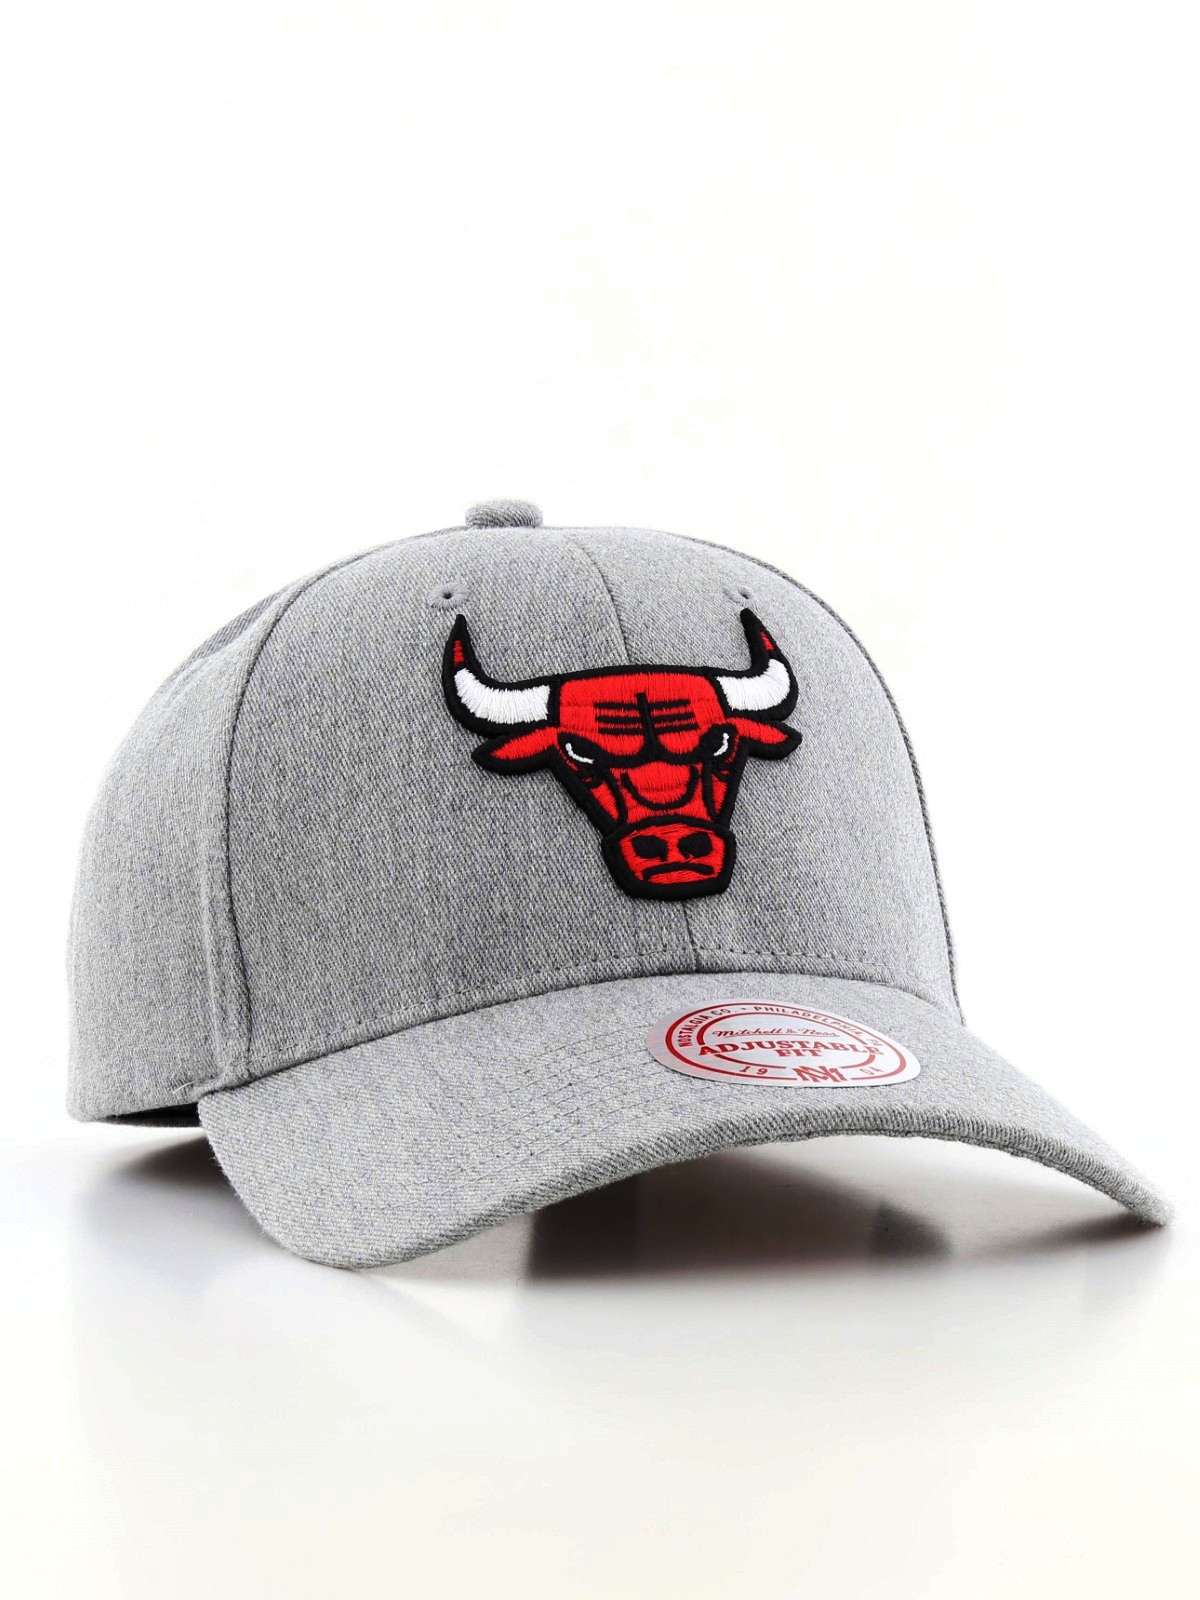 Mitchell & Ness Chicago Bulls Team Logo Low Pro Snapback Men's Cap Heather Grey